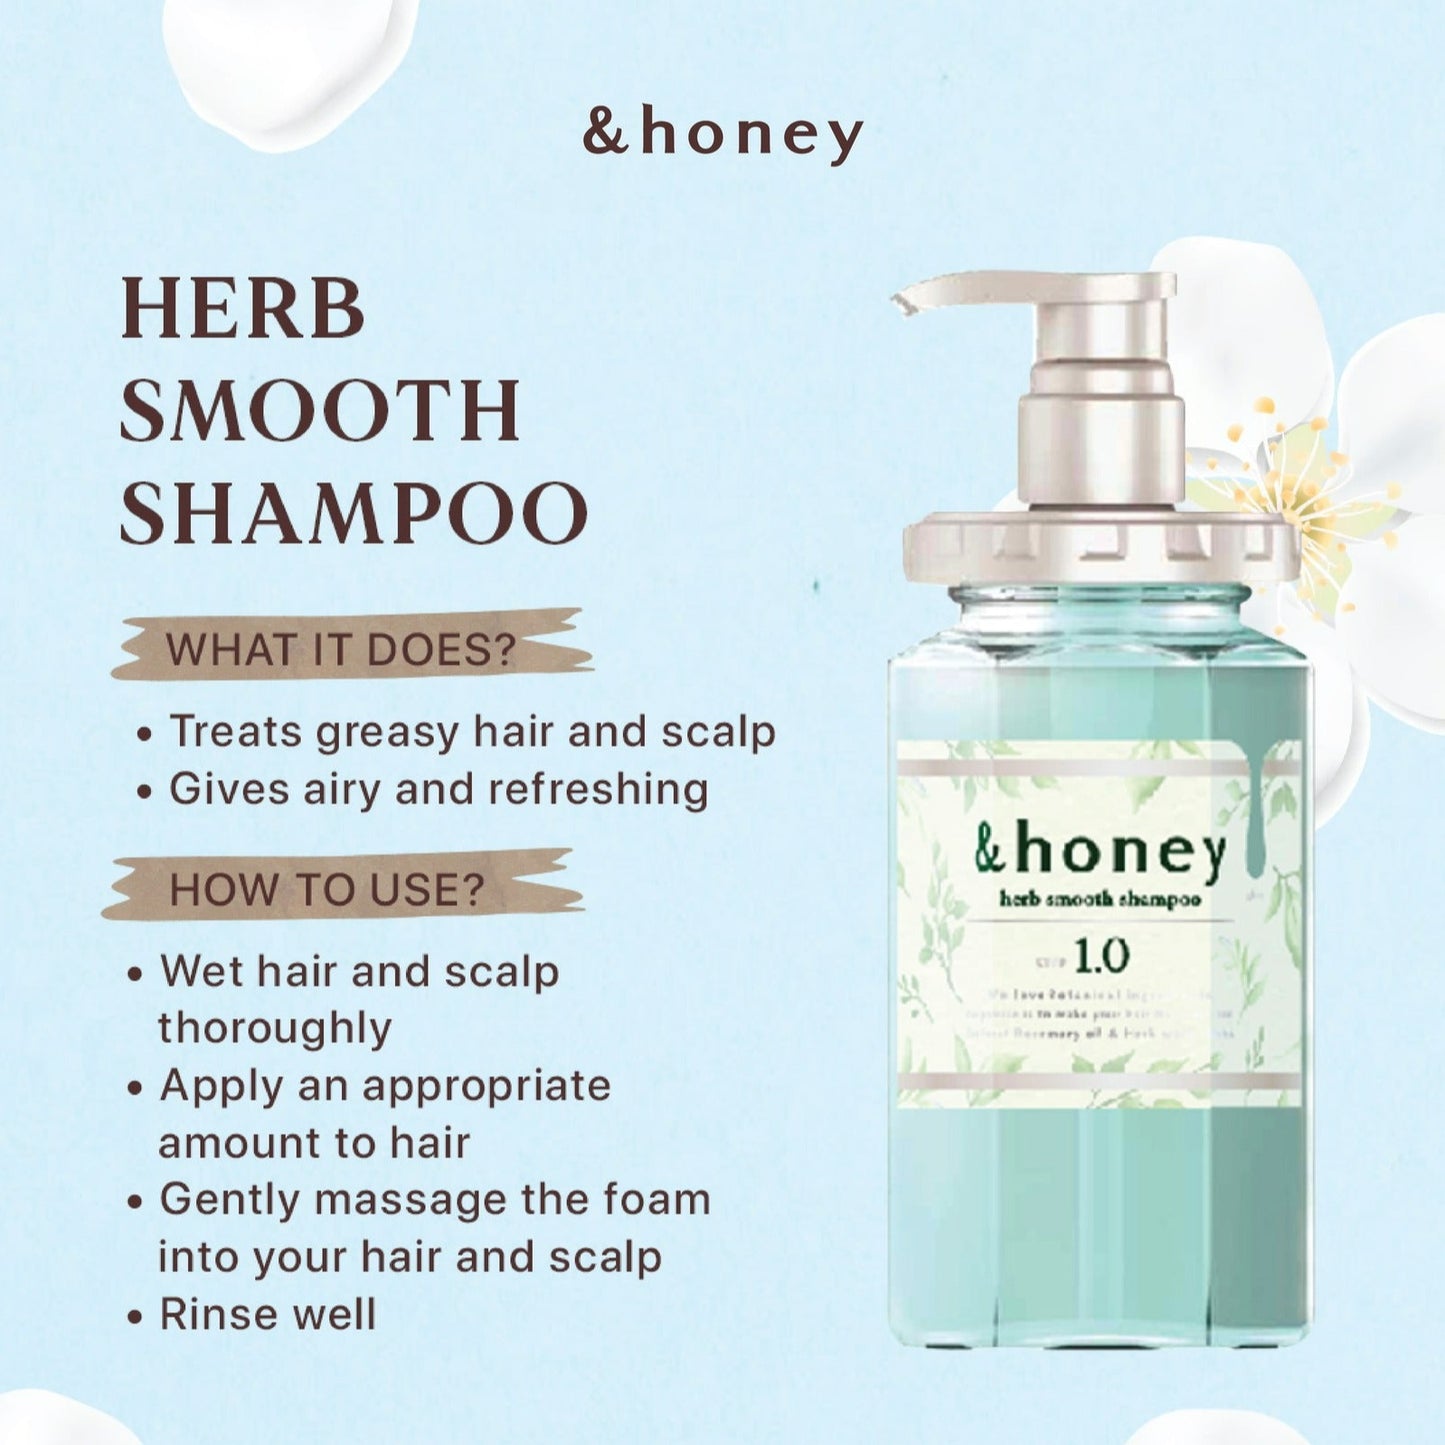 &HONEY Herb Smooth Shampoo 1.0